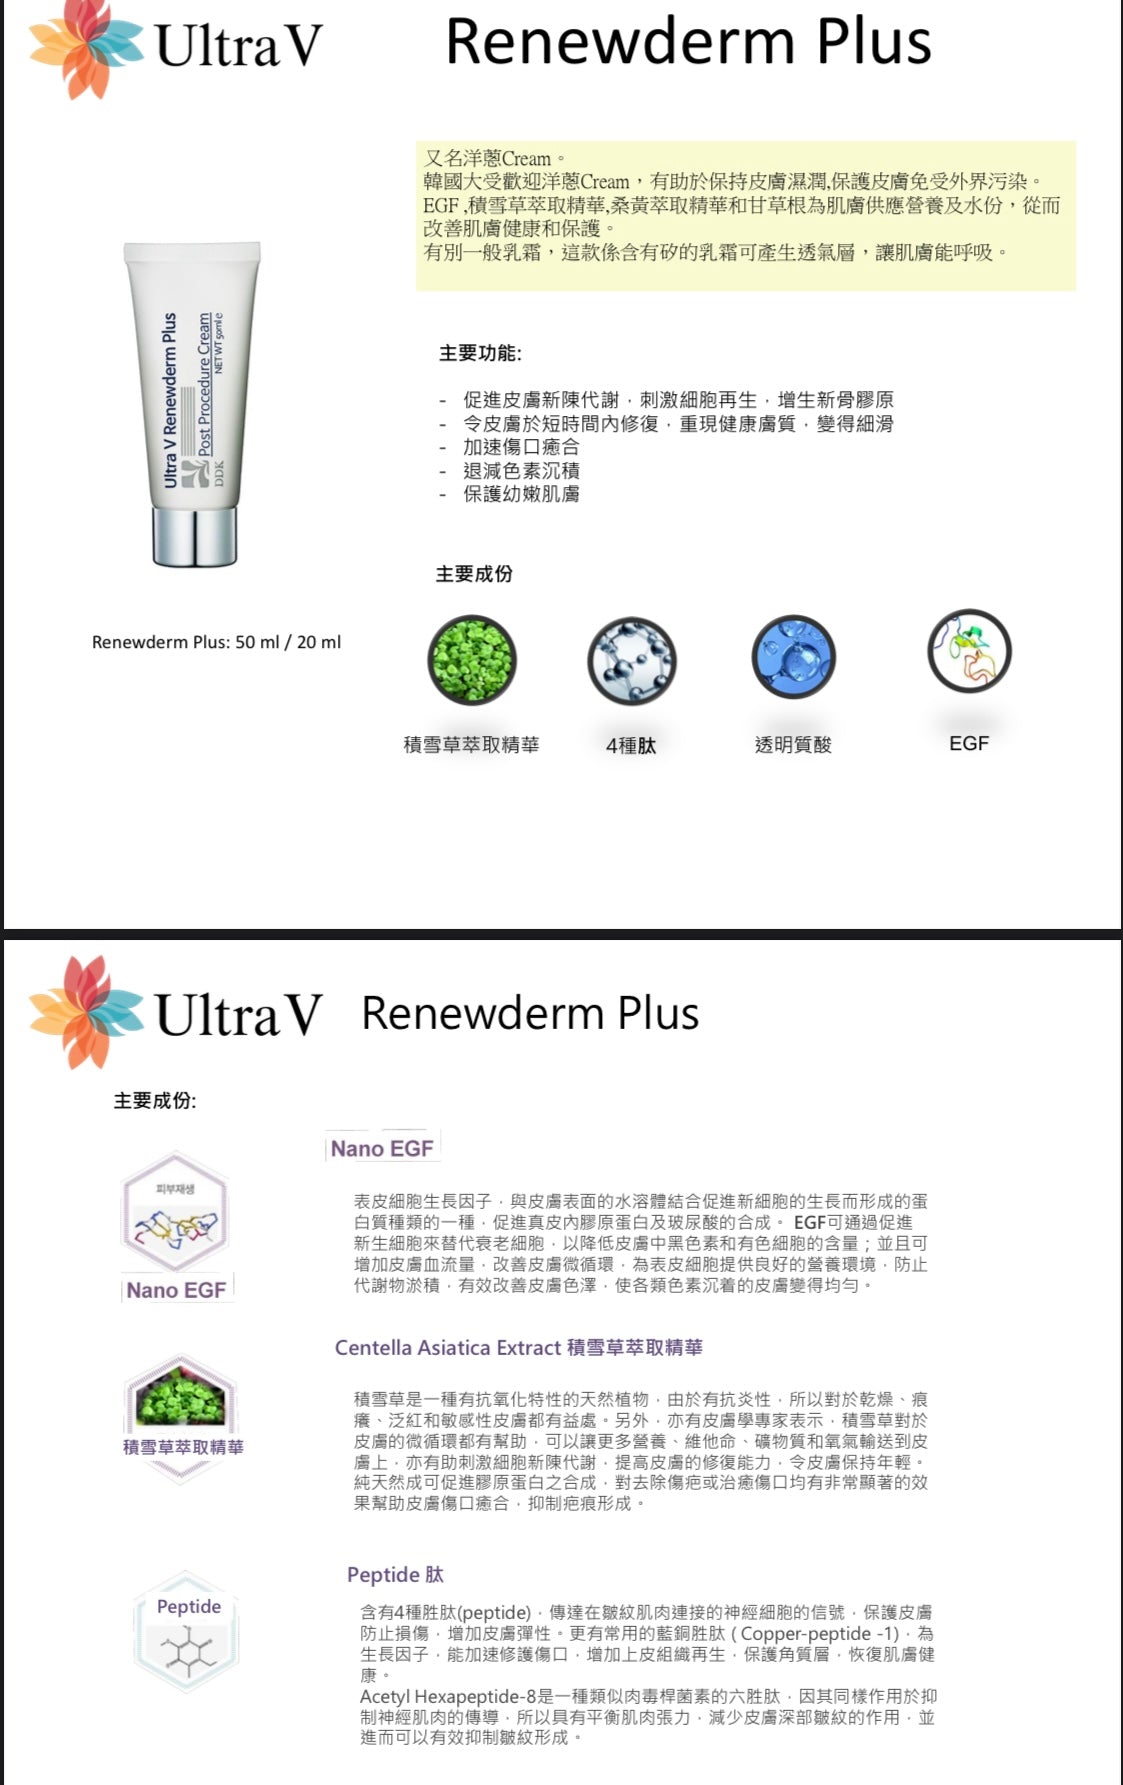 DDK Ultra V Renewderm Plus 50 ml 韓國細胞再生活膚修護霜【洋蔥 Cream】 - Beauty’s 5skin 